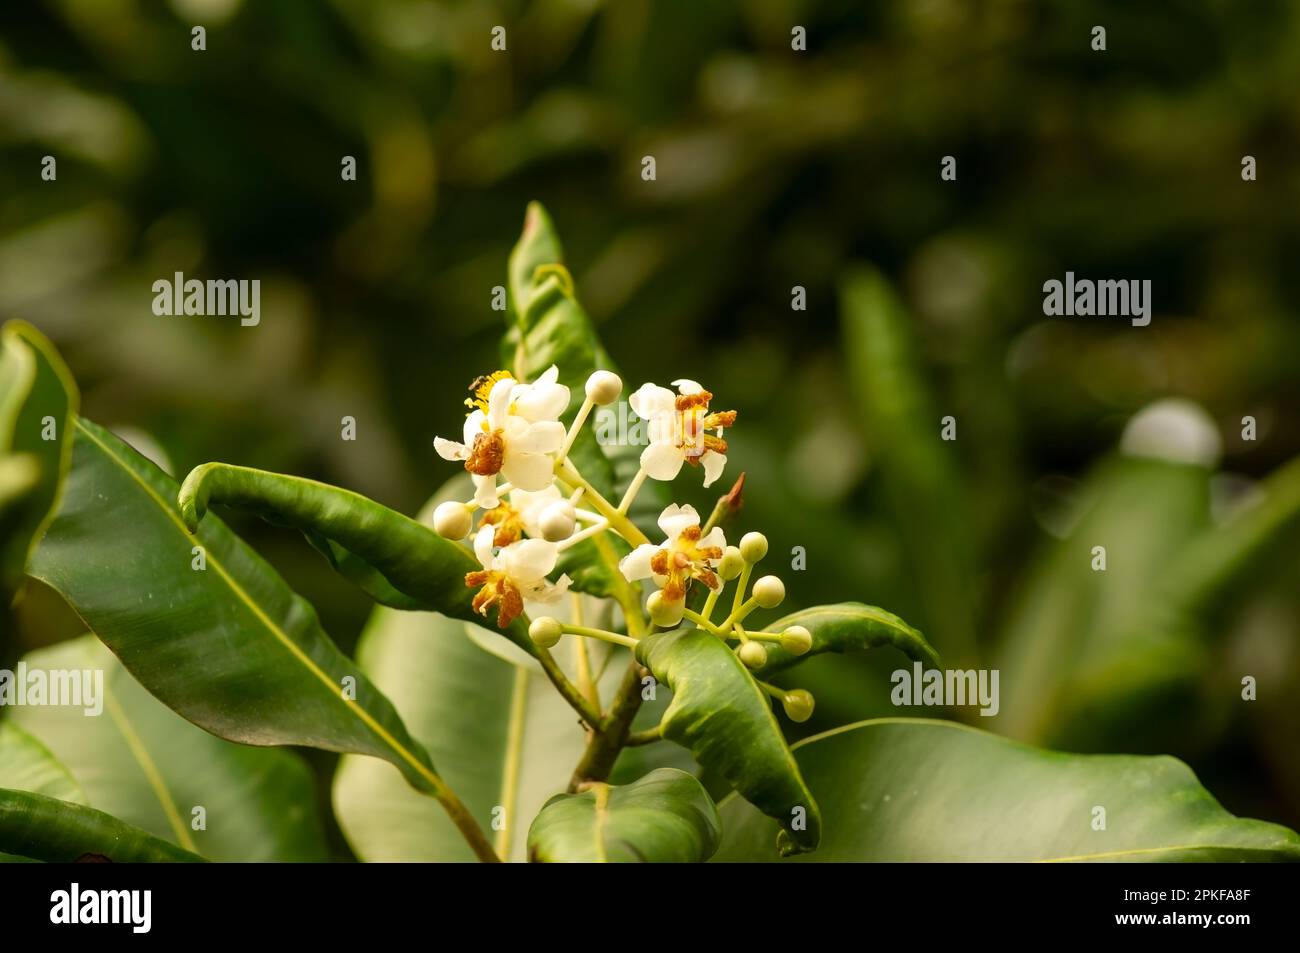 Nyamplung, Alexandrian Laurel (Calophyllum inophyllum) flowers blooming Stock Photo